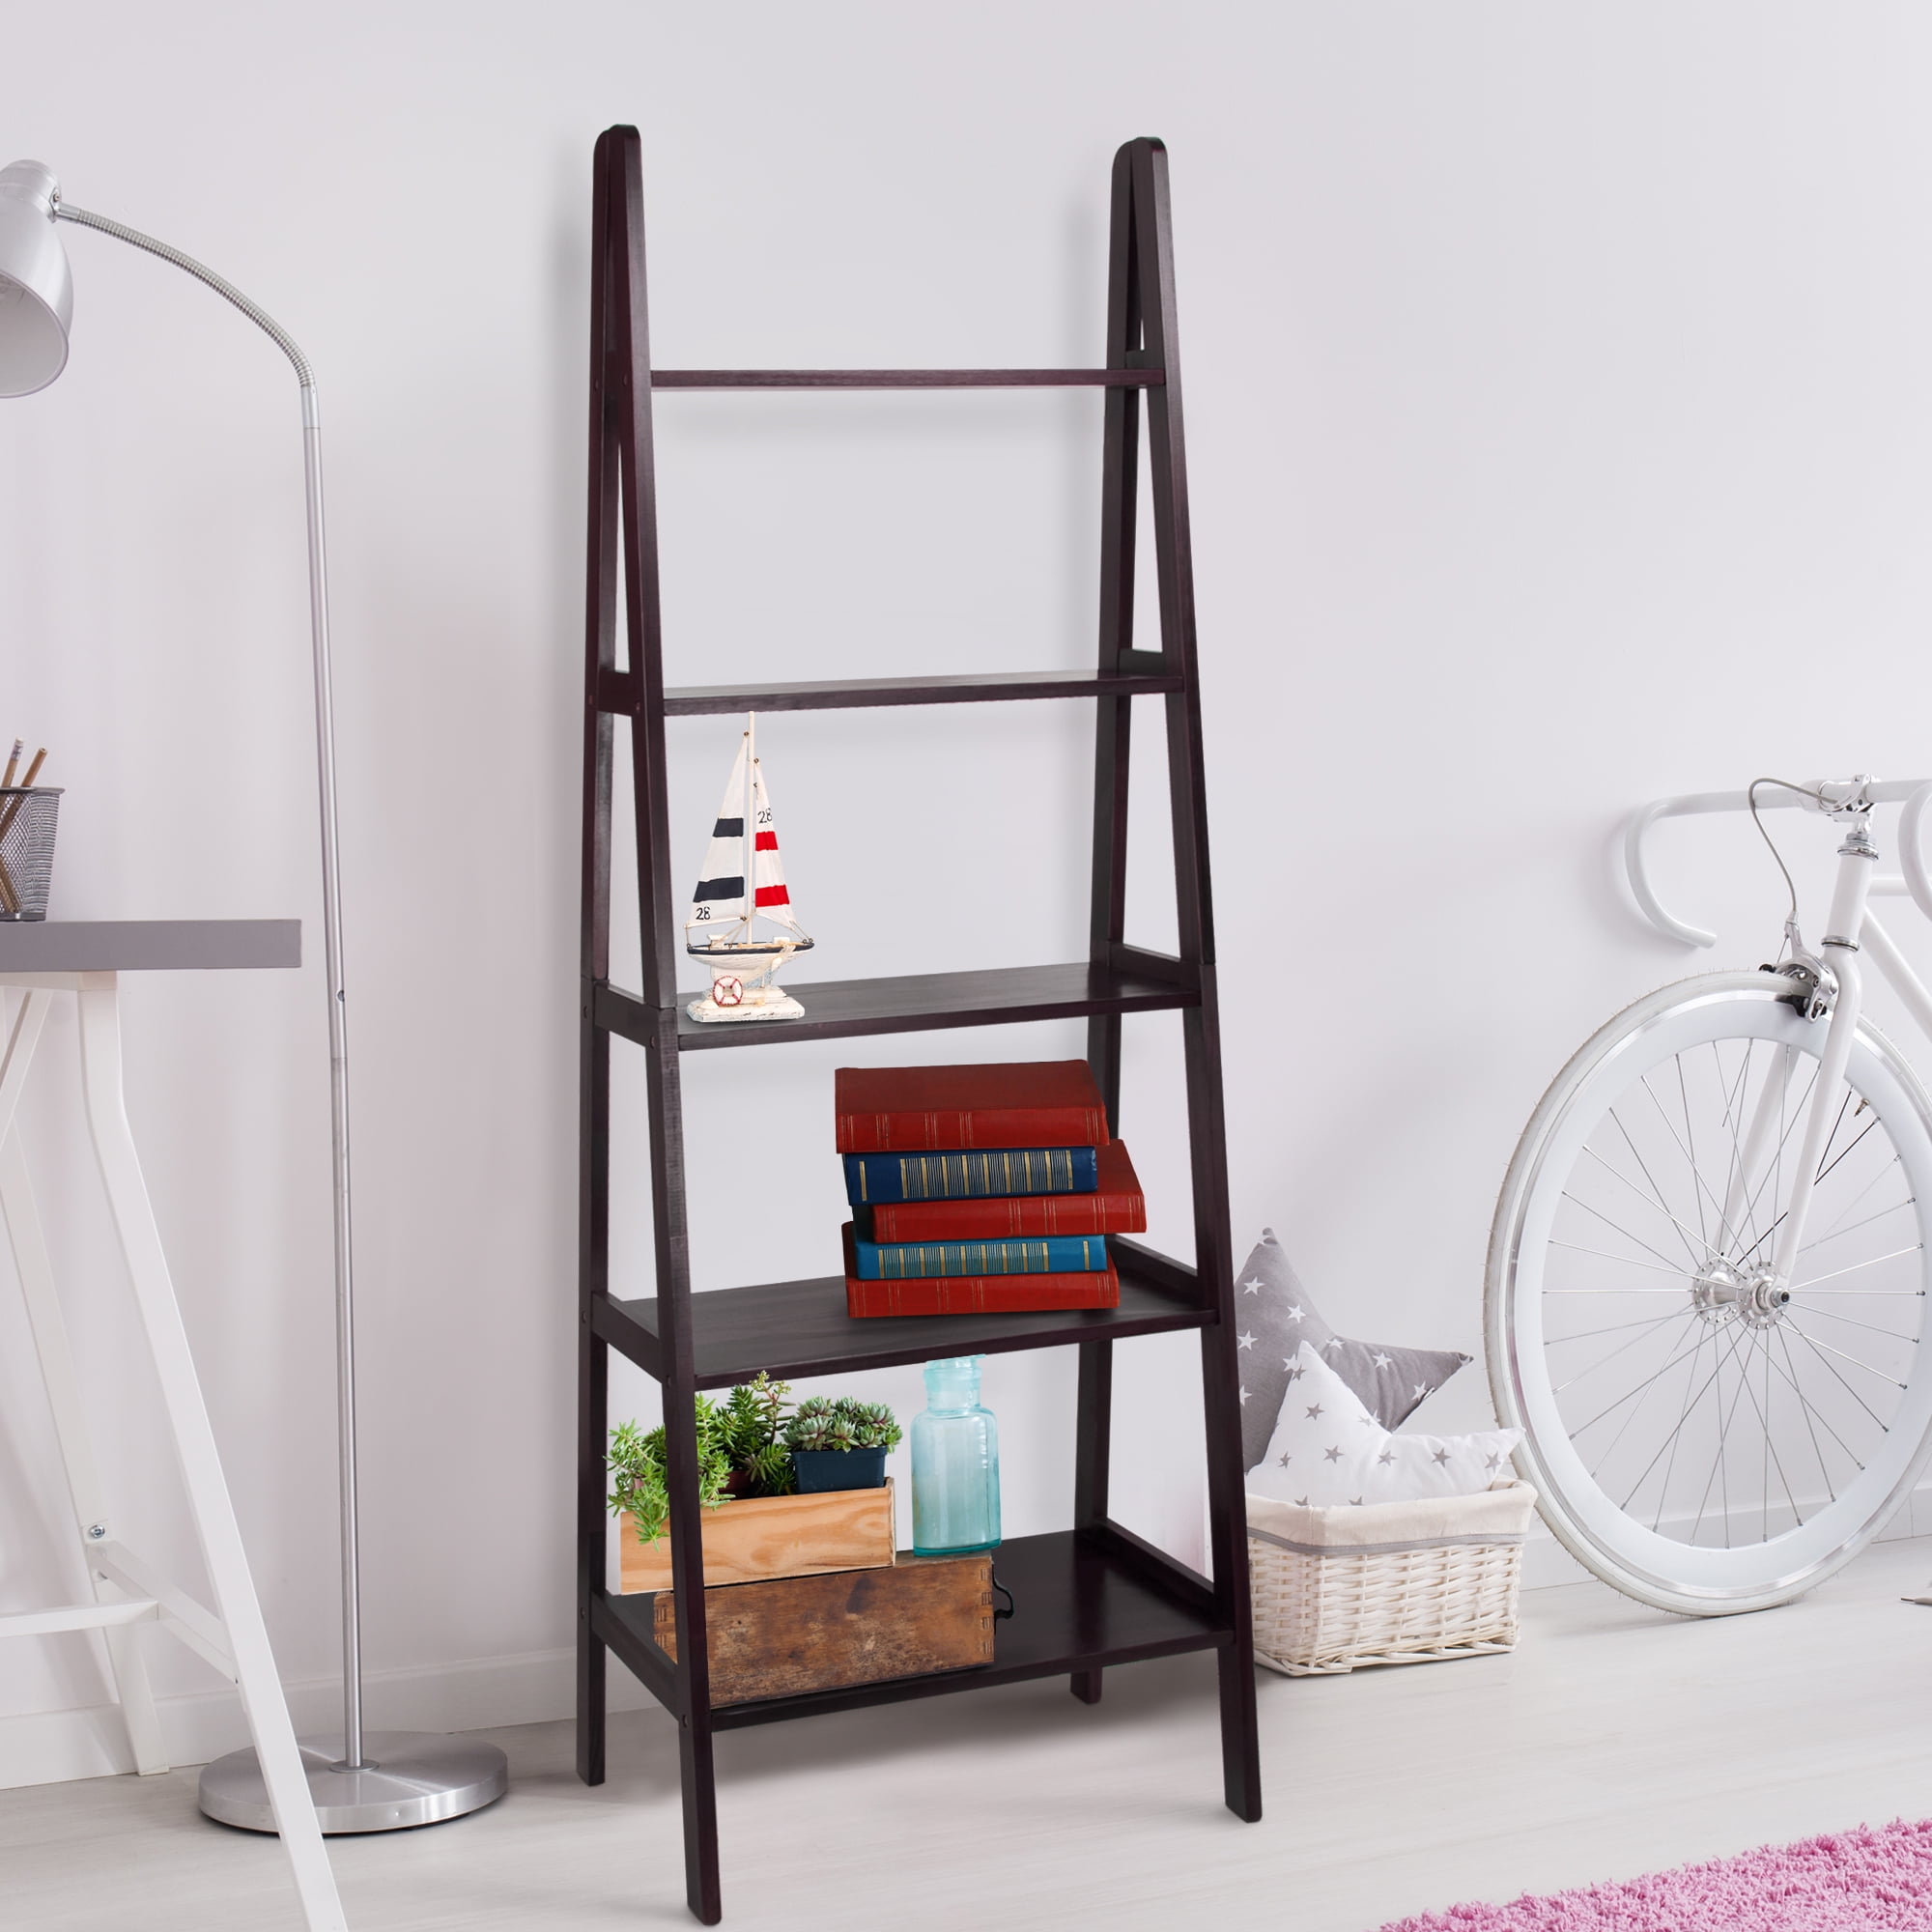 5 Shelf Ladder Bookcase Espresso, Espresso Colored Shelves